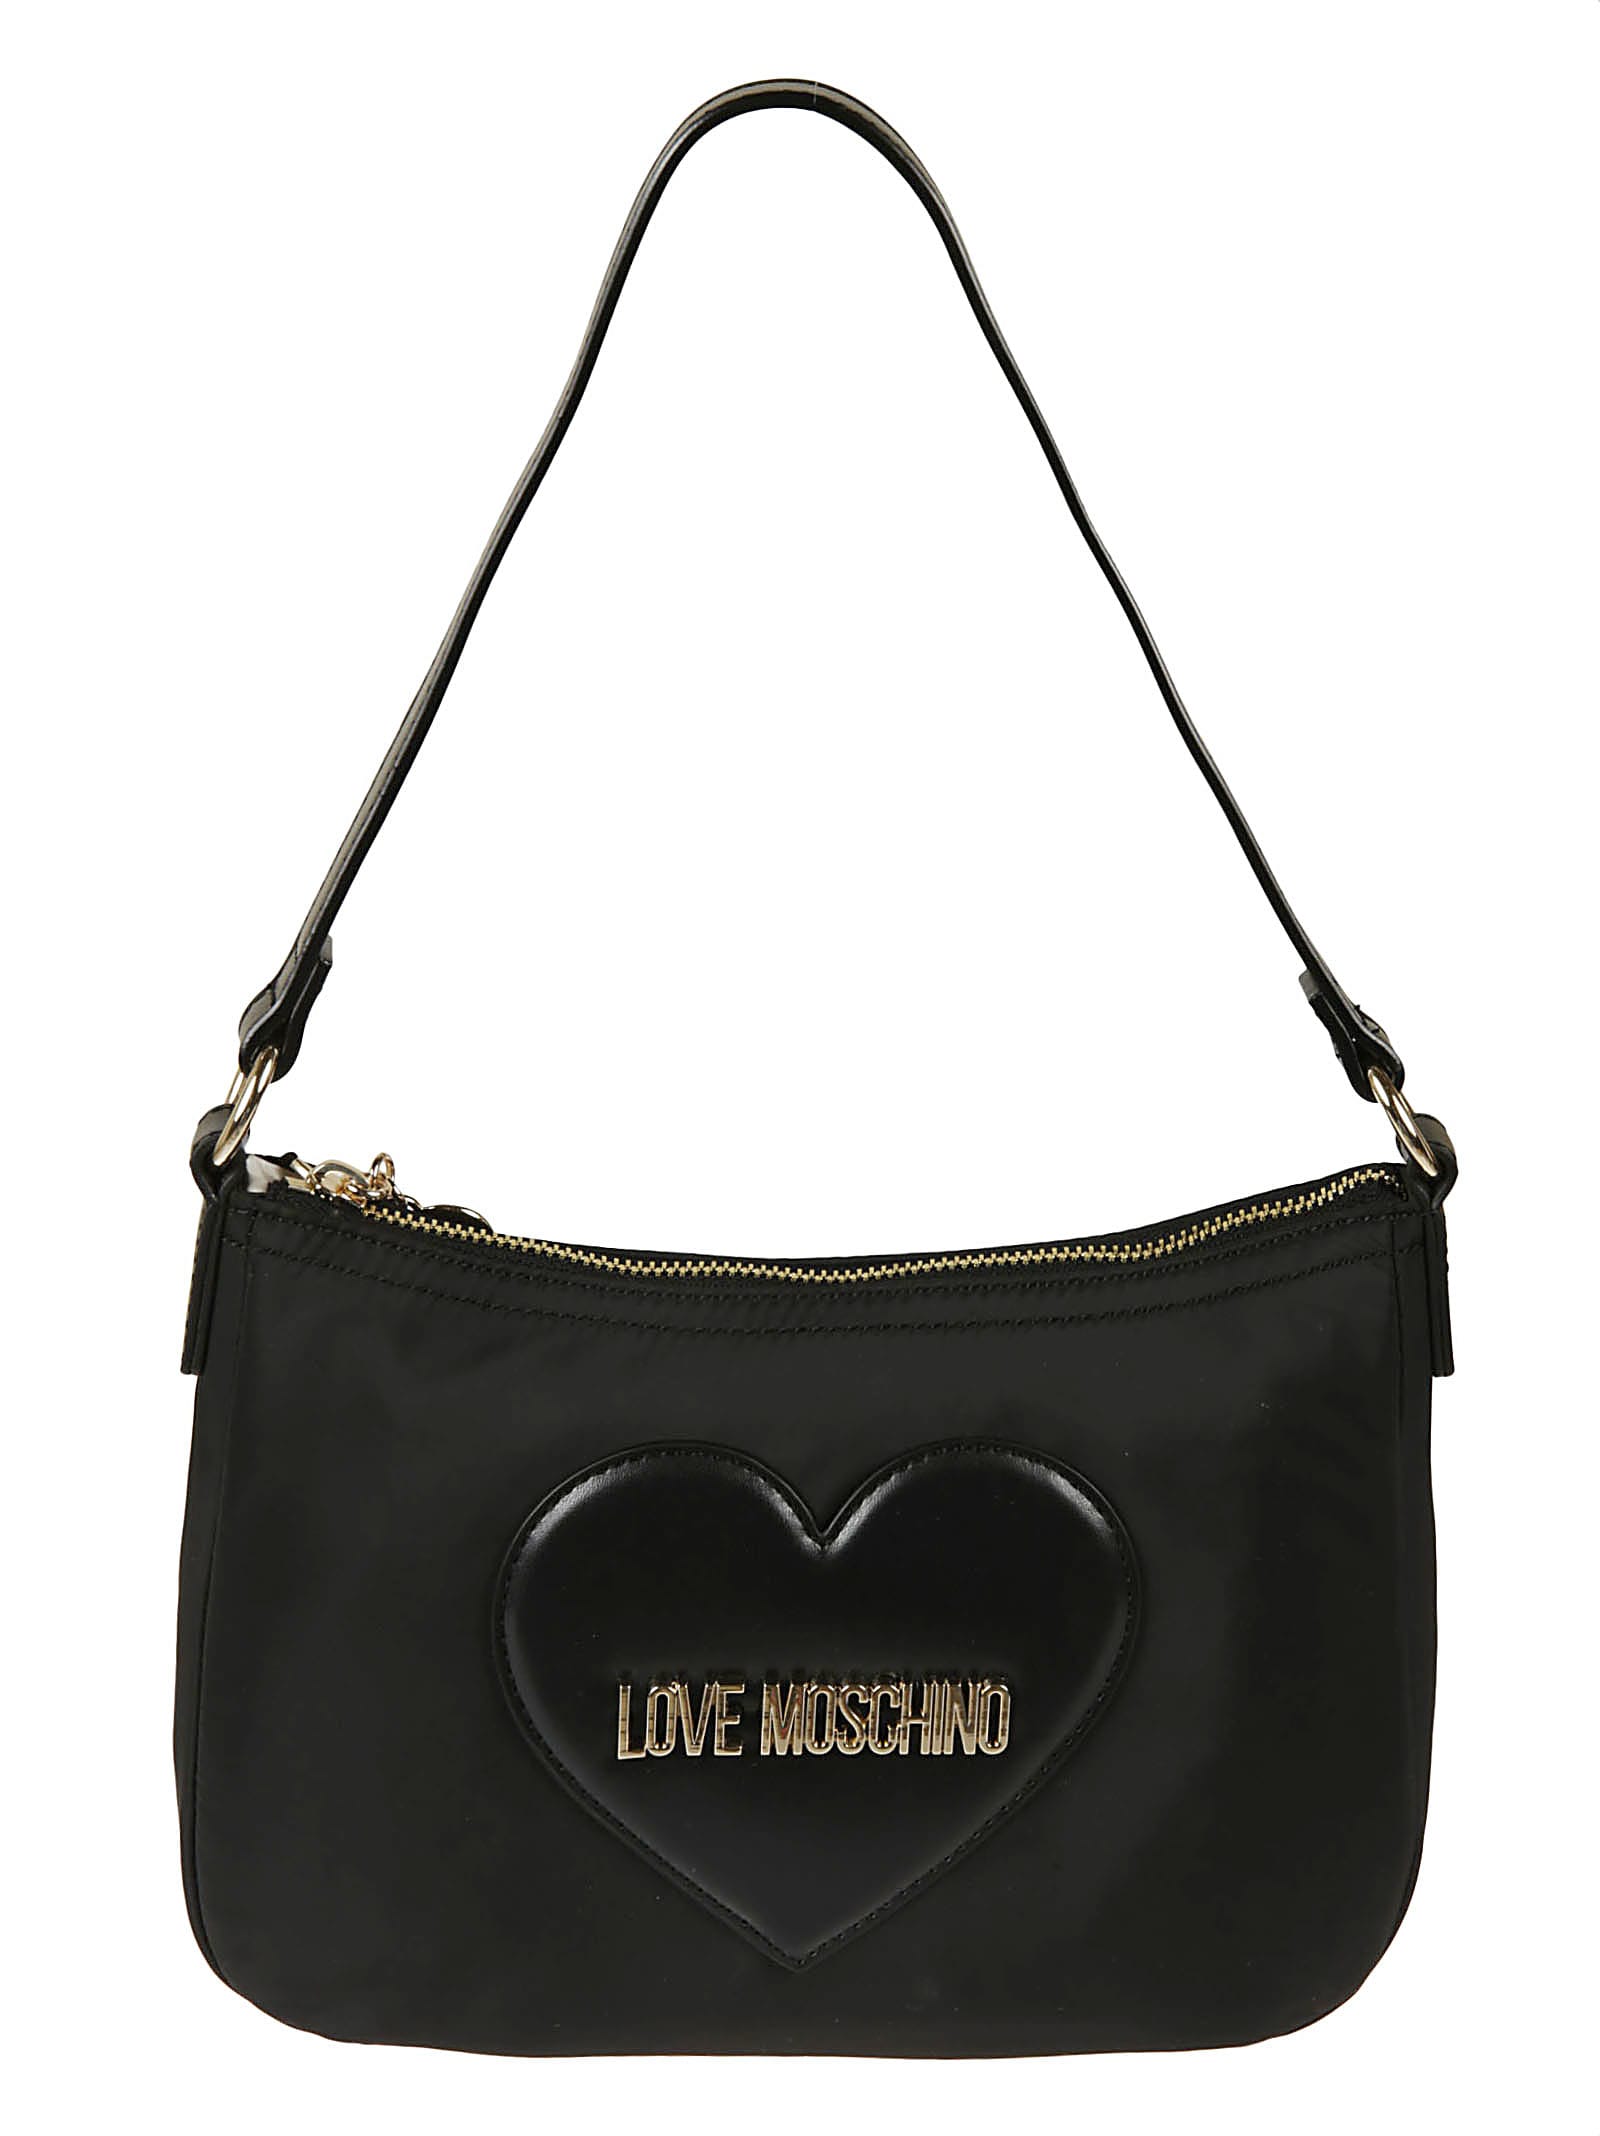 LOVE MOSCHINO Shoulder Bags for Women | ModeSens